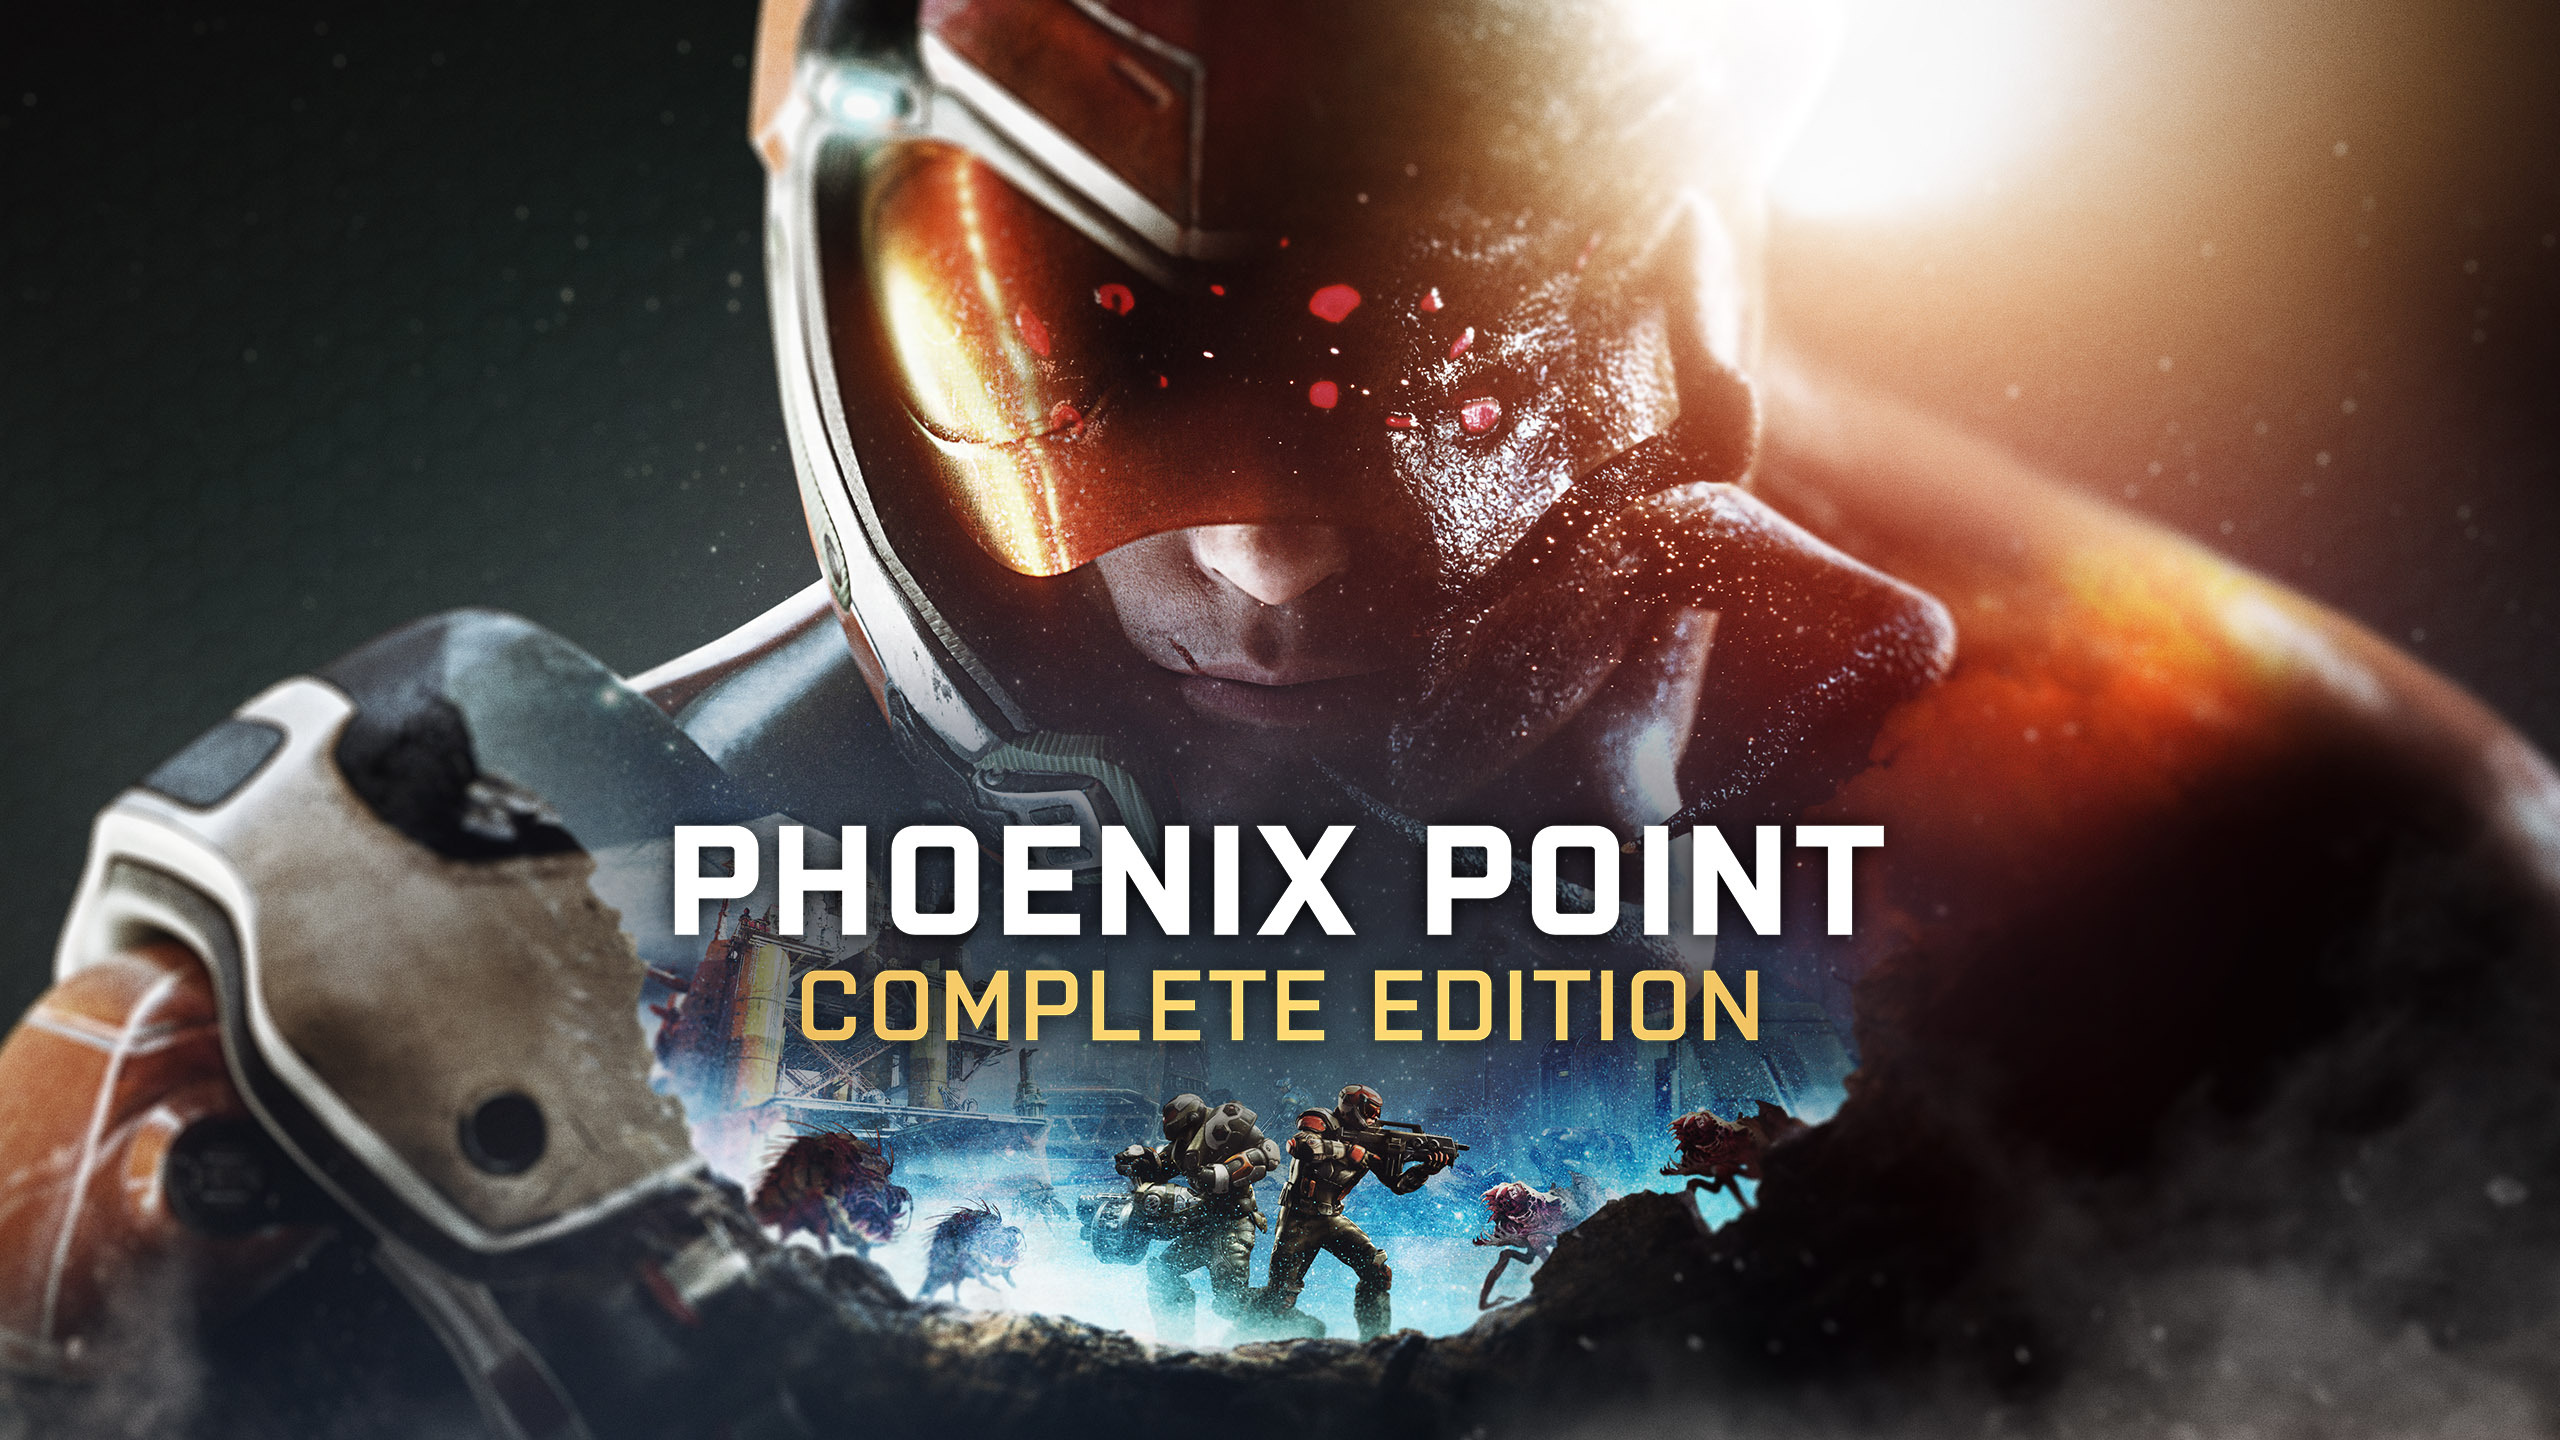 phoenix point 2 download free